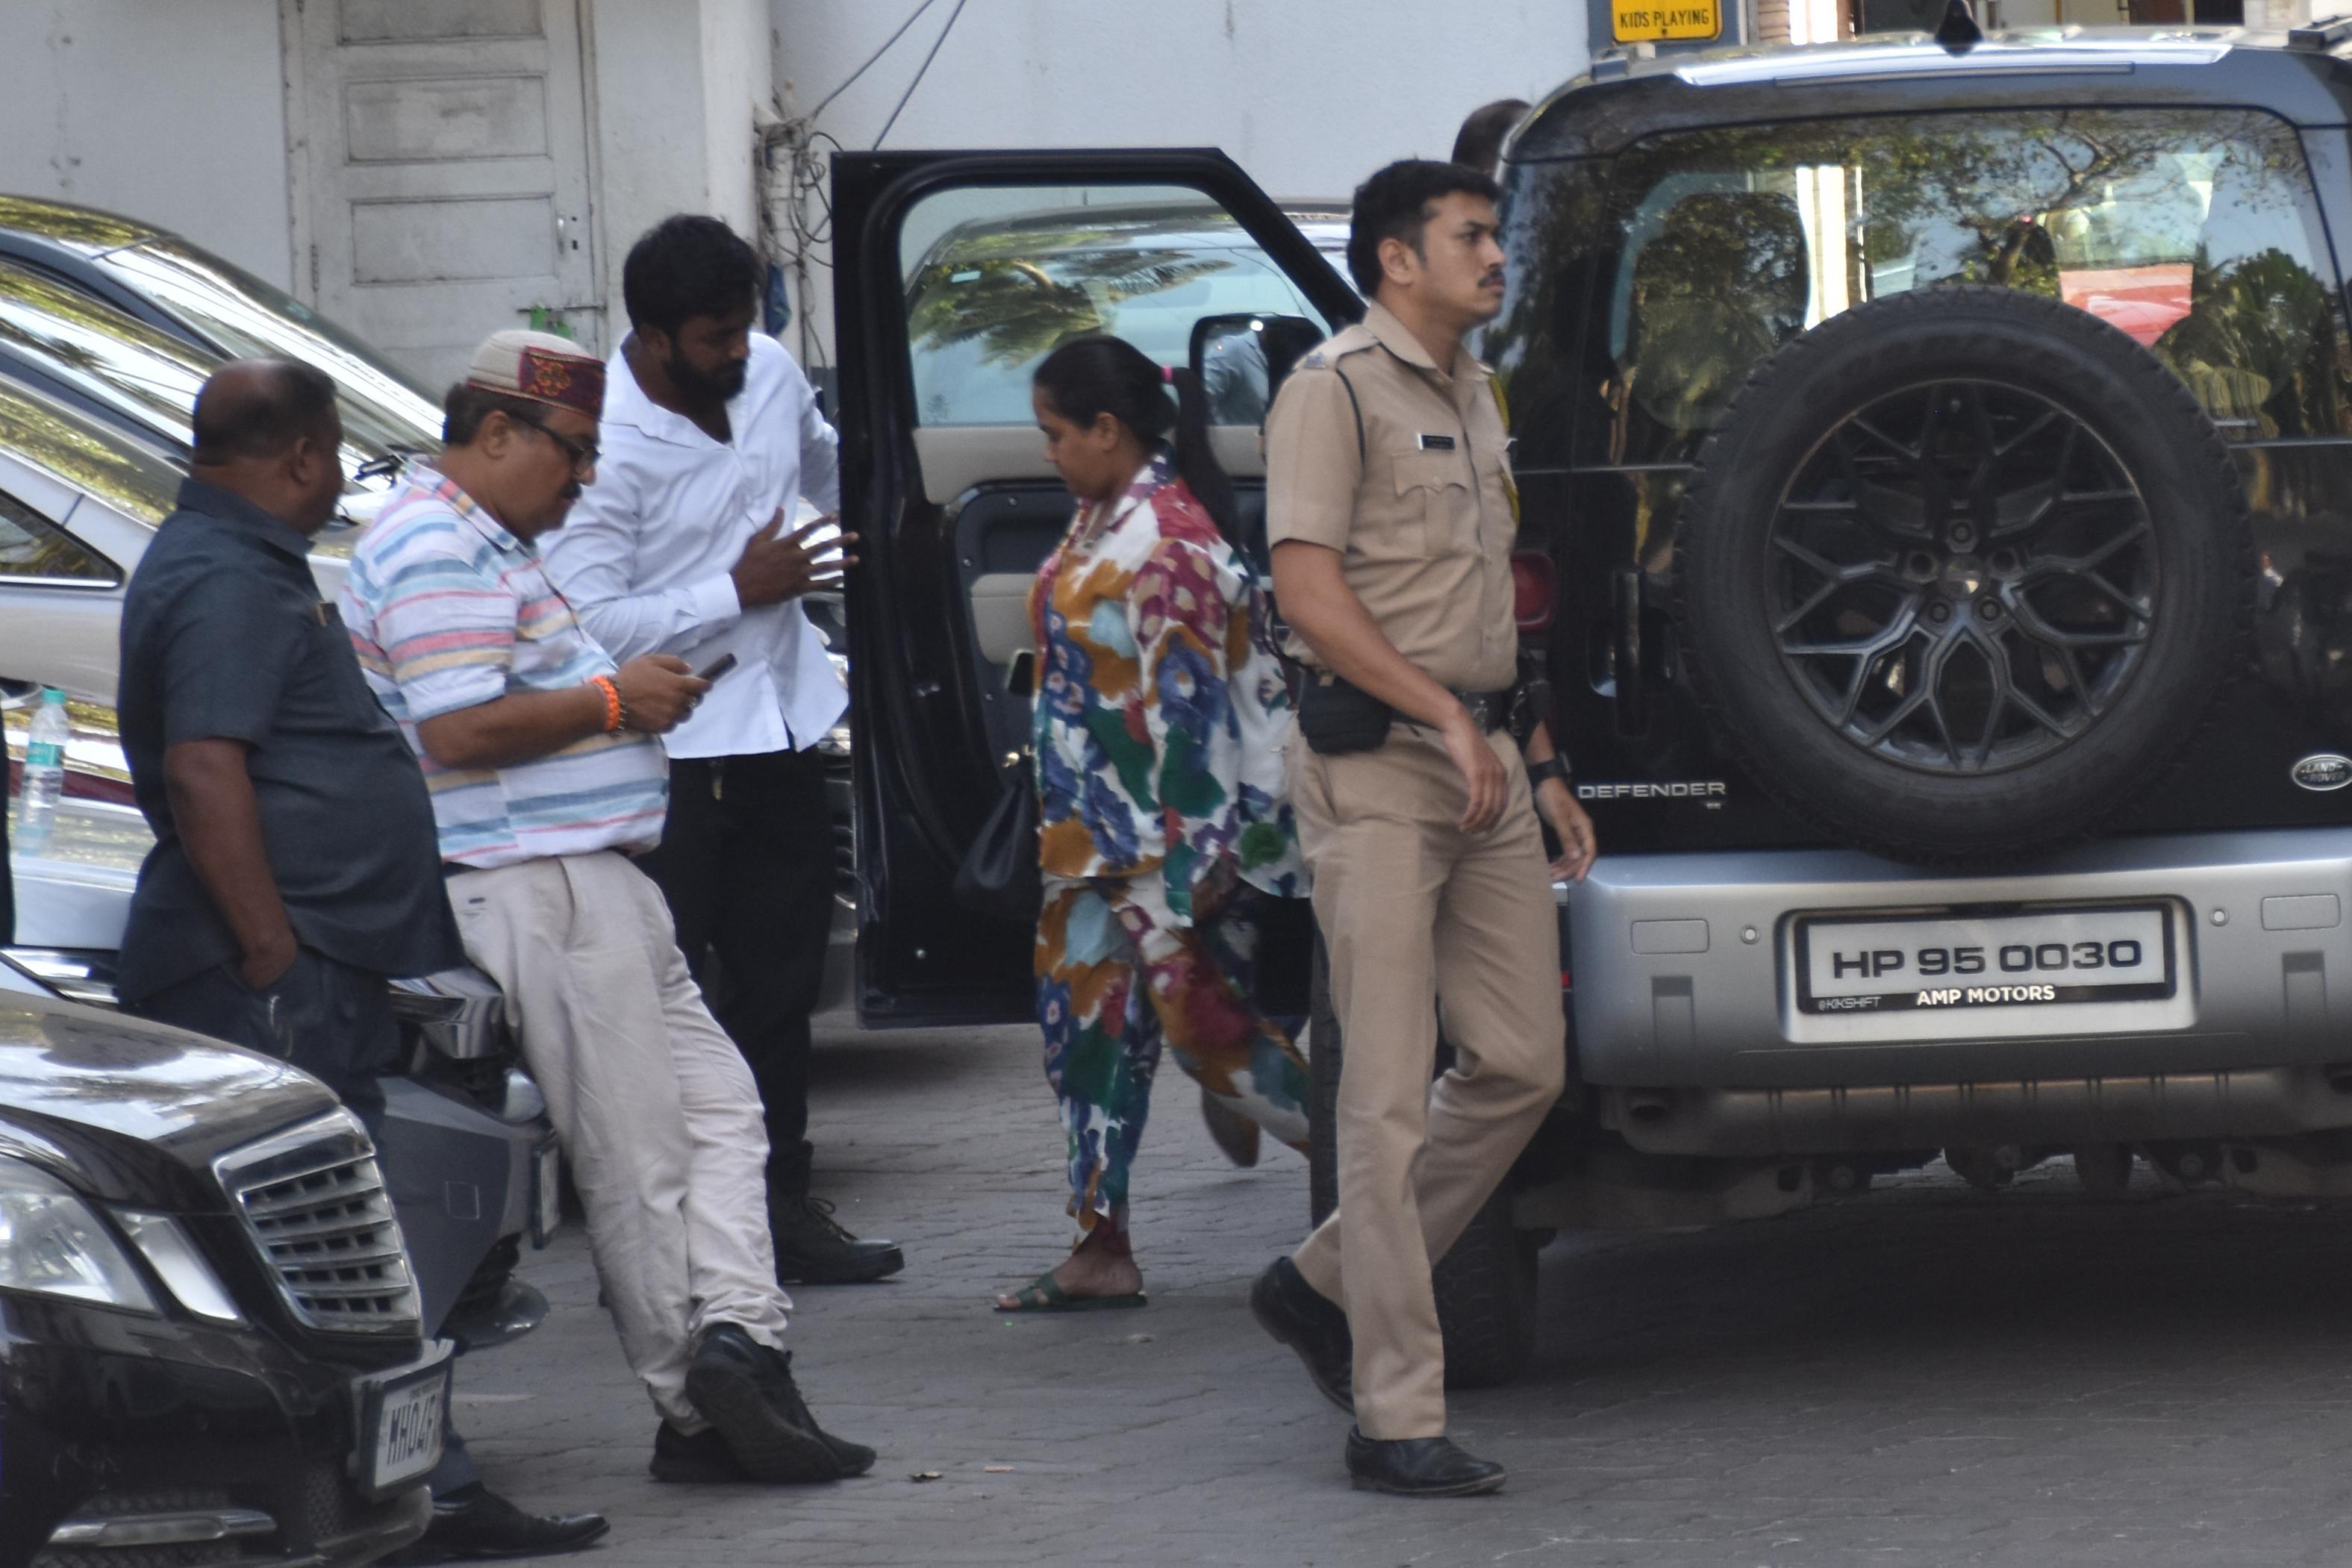 Salman Khan's sister Arpita was seen arriving at the building